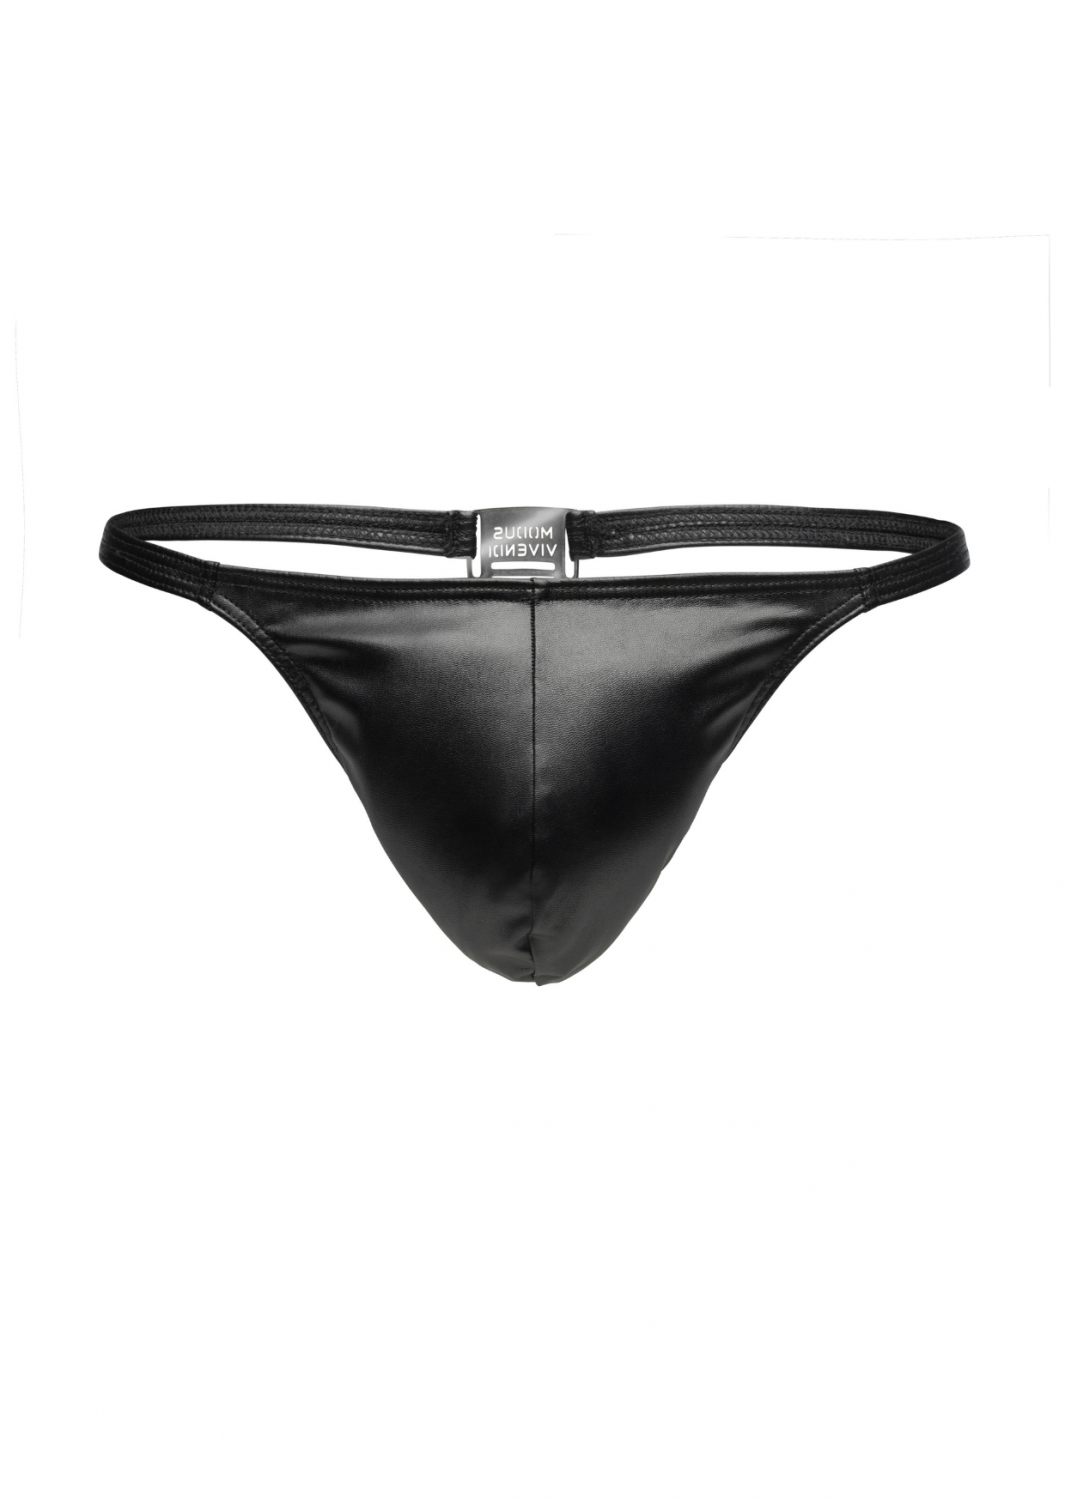 Modus Vivendi Leather look thong black | men's underwear HerMan's